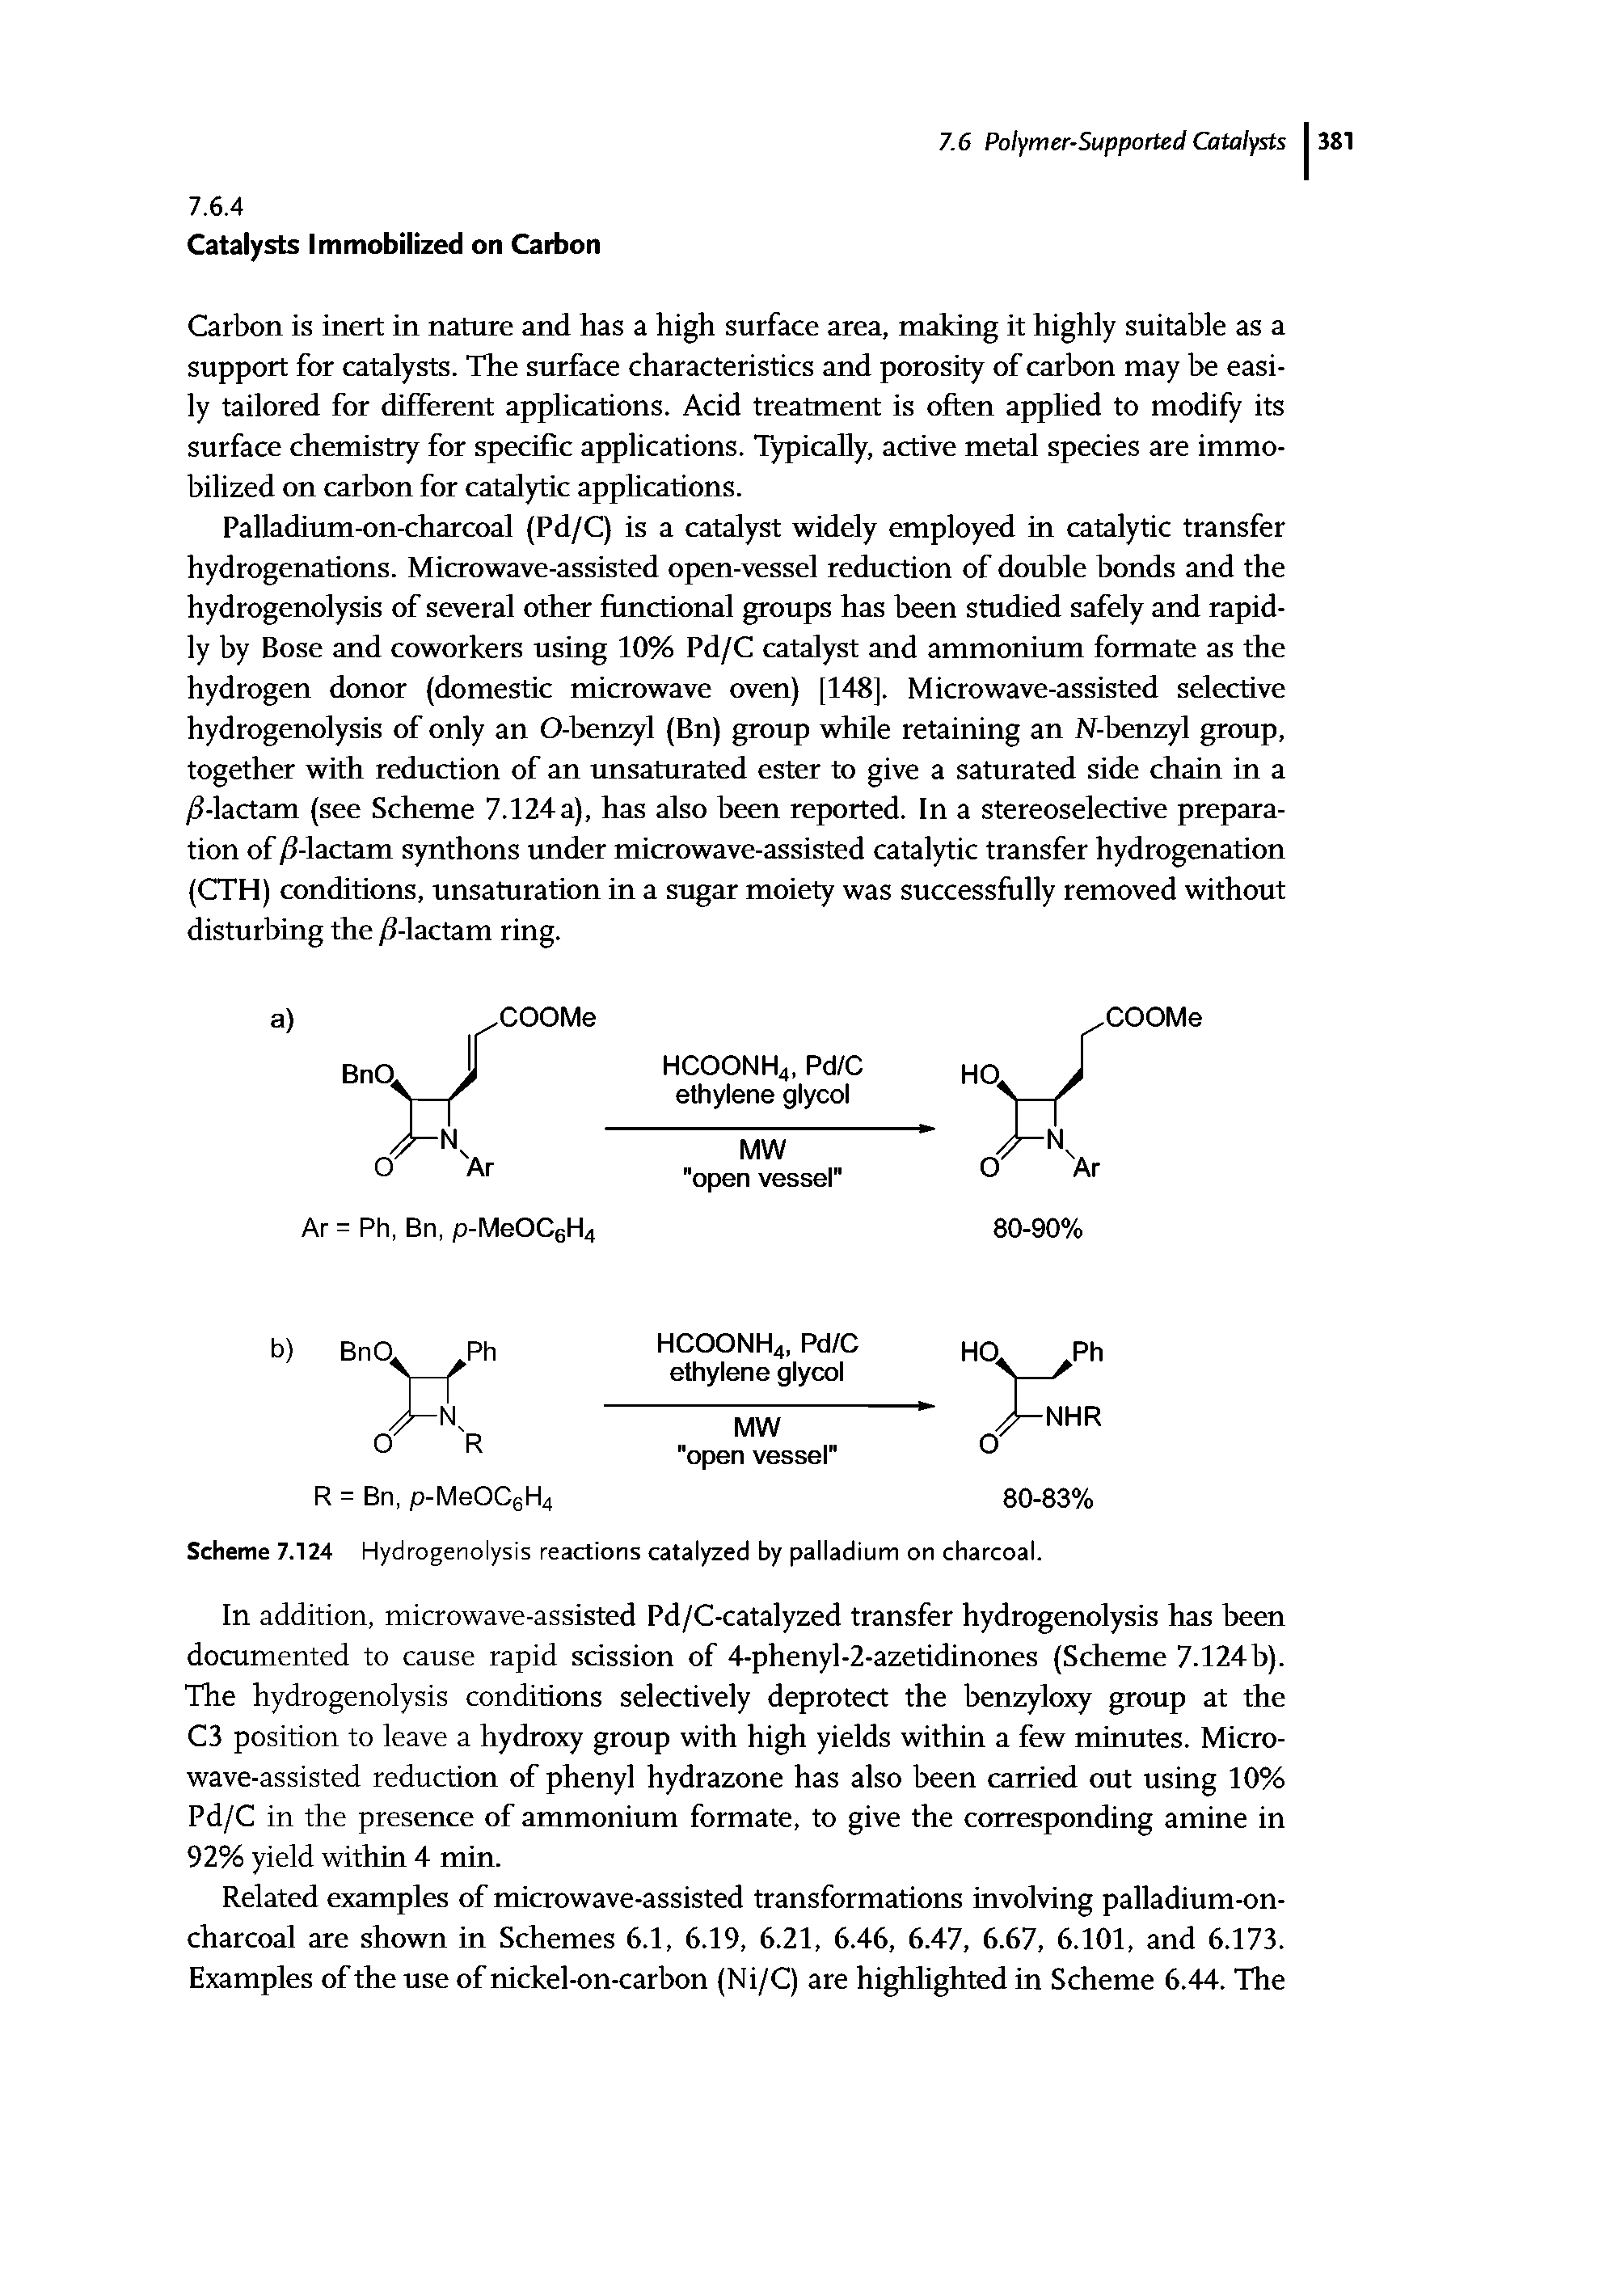 Scheme 7.124 Hydrogenolysis reactions catalyzed by palladium on charcoal.